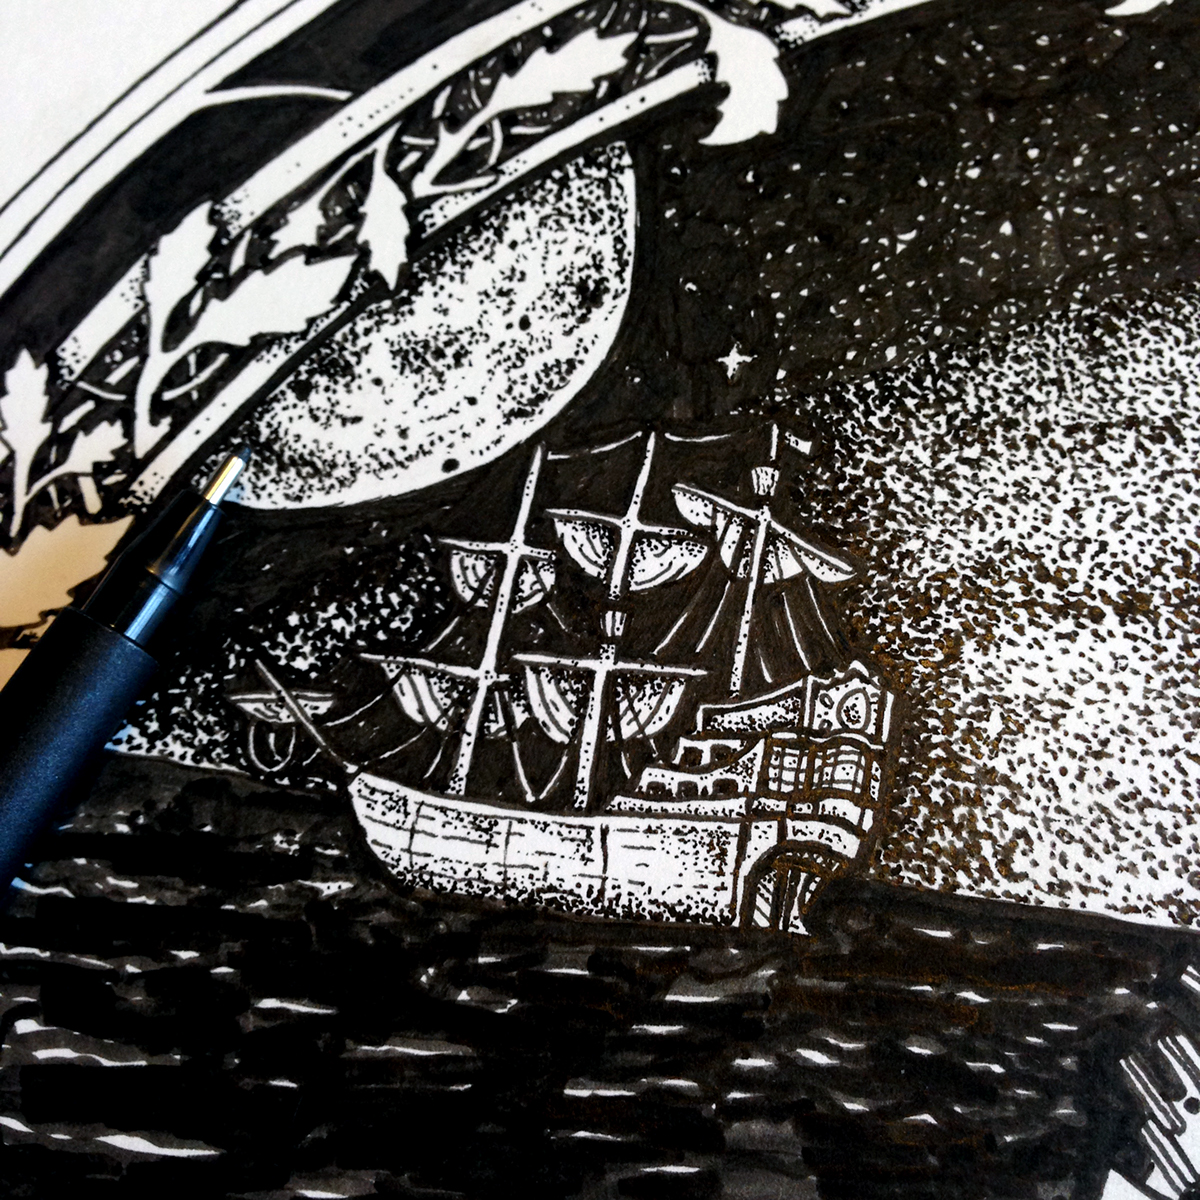 ink pen inkpen artist mermaid sailing nautical stars moon compass ornamental flourish Nature fantasy whimsical